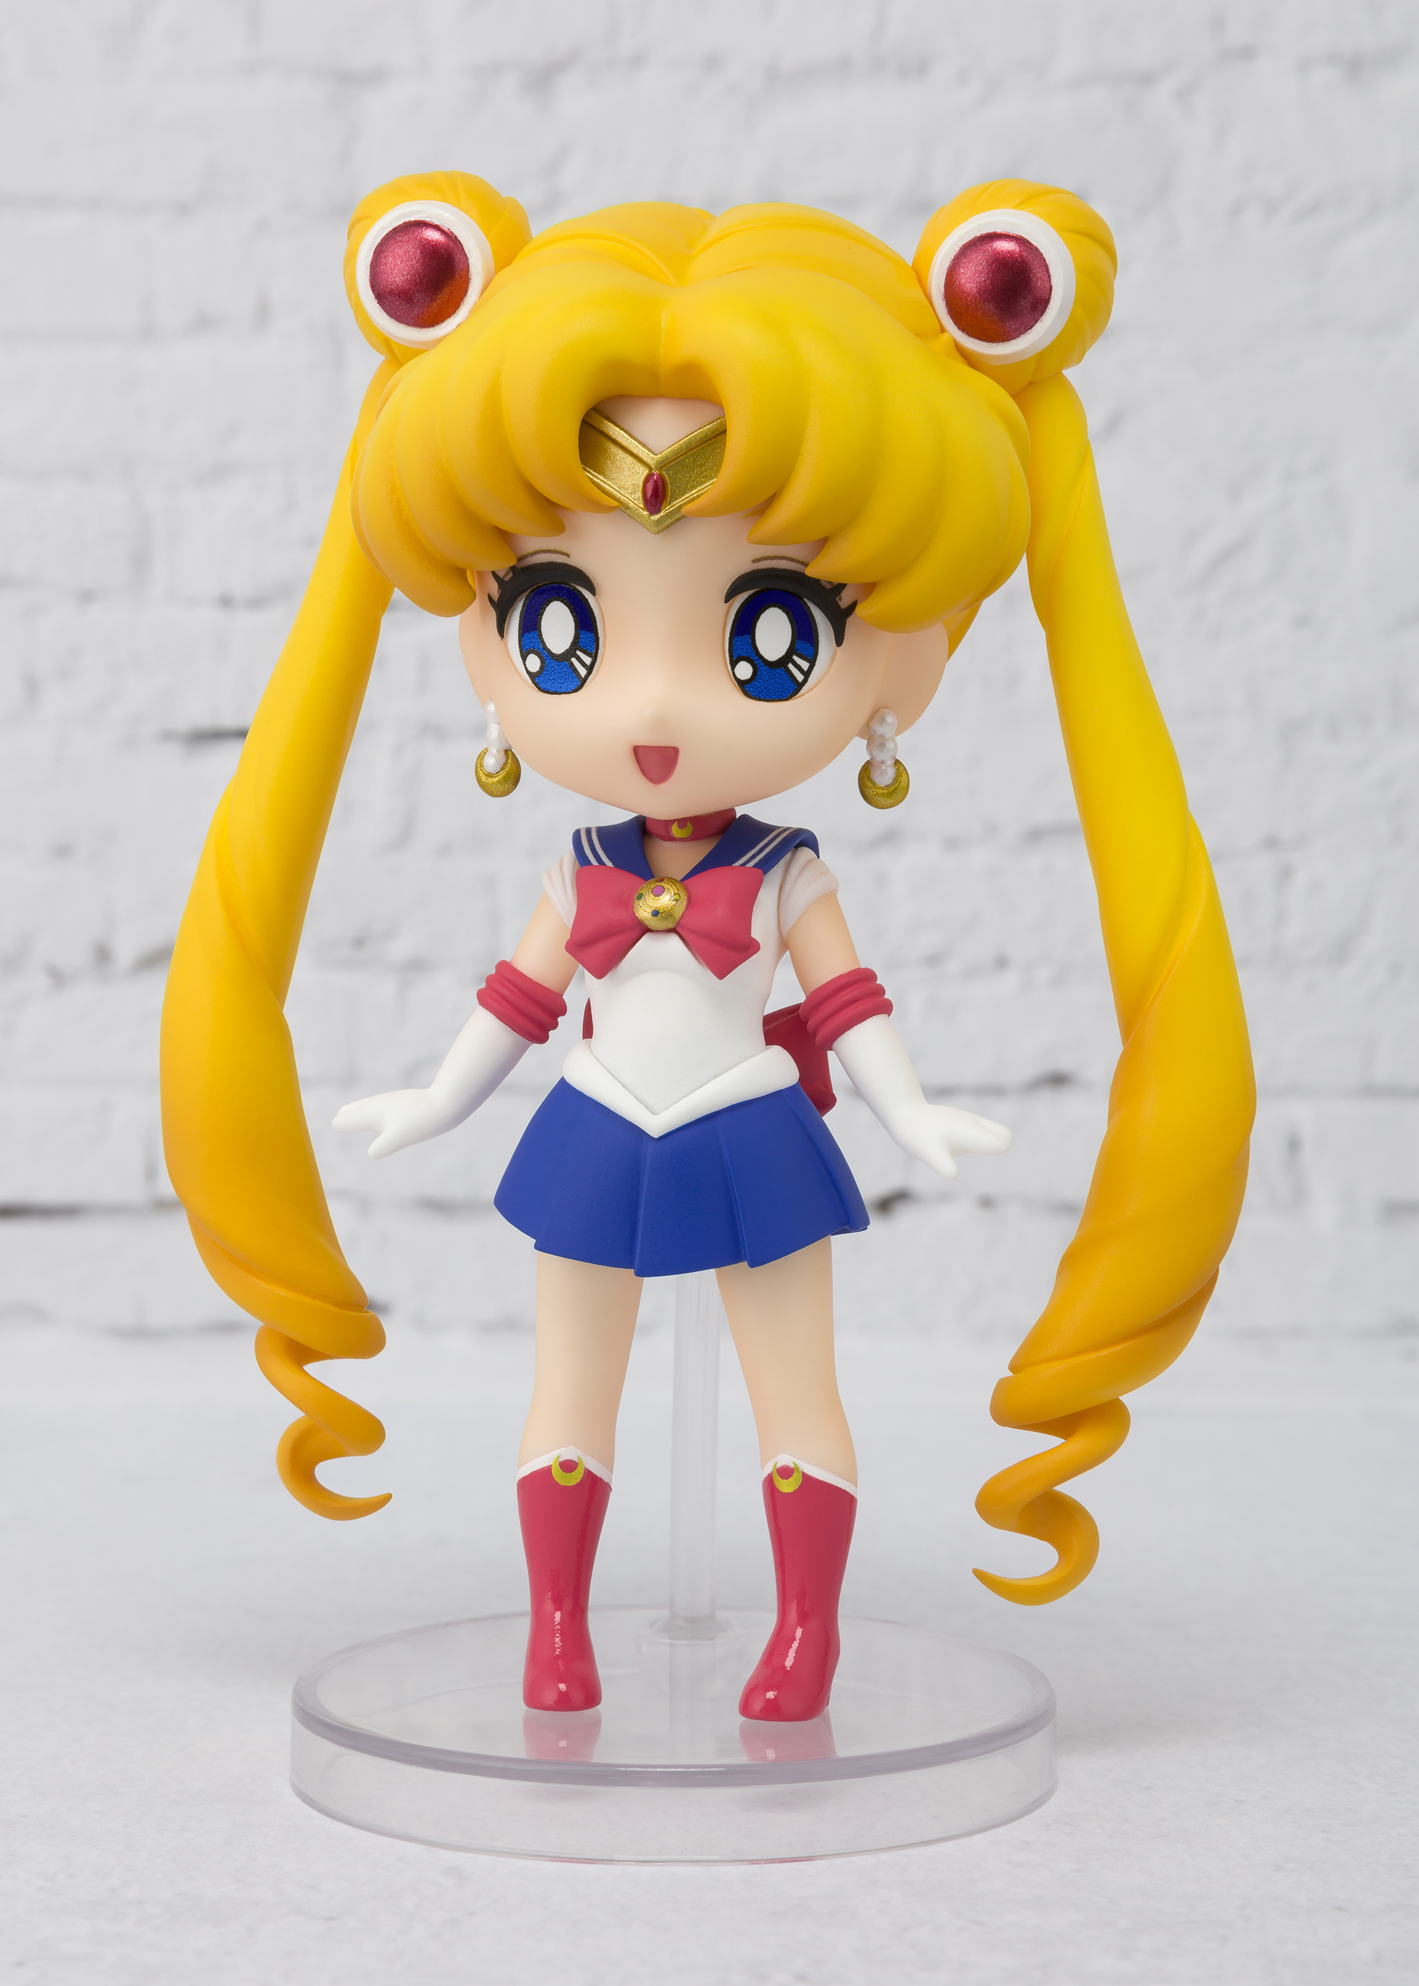 Sailor Moon: Sailor Moon Figuarts Mini